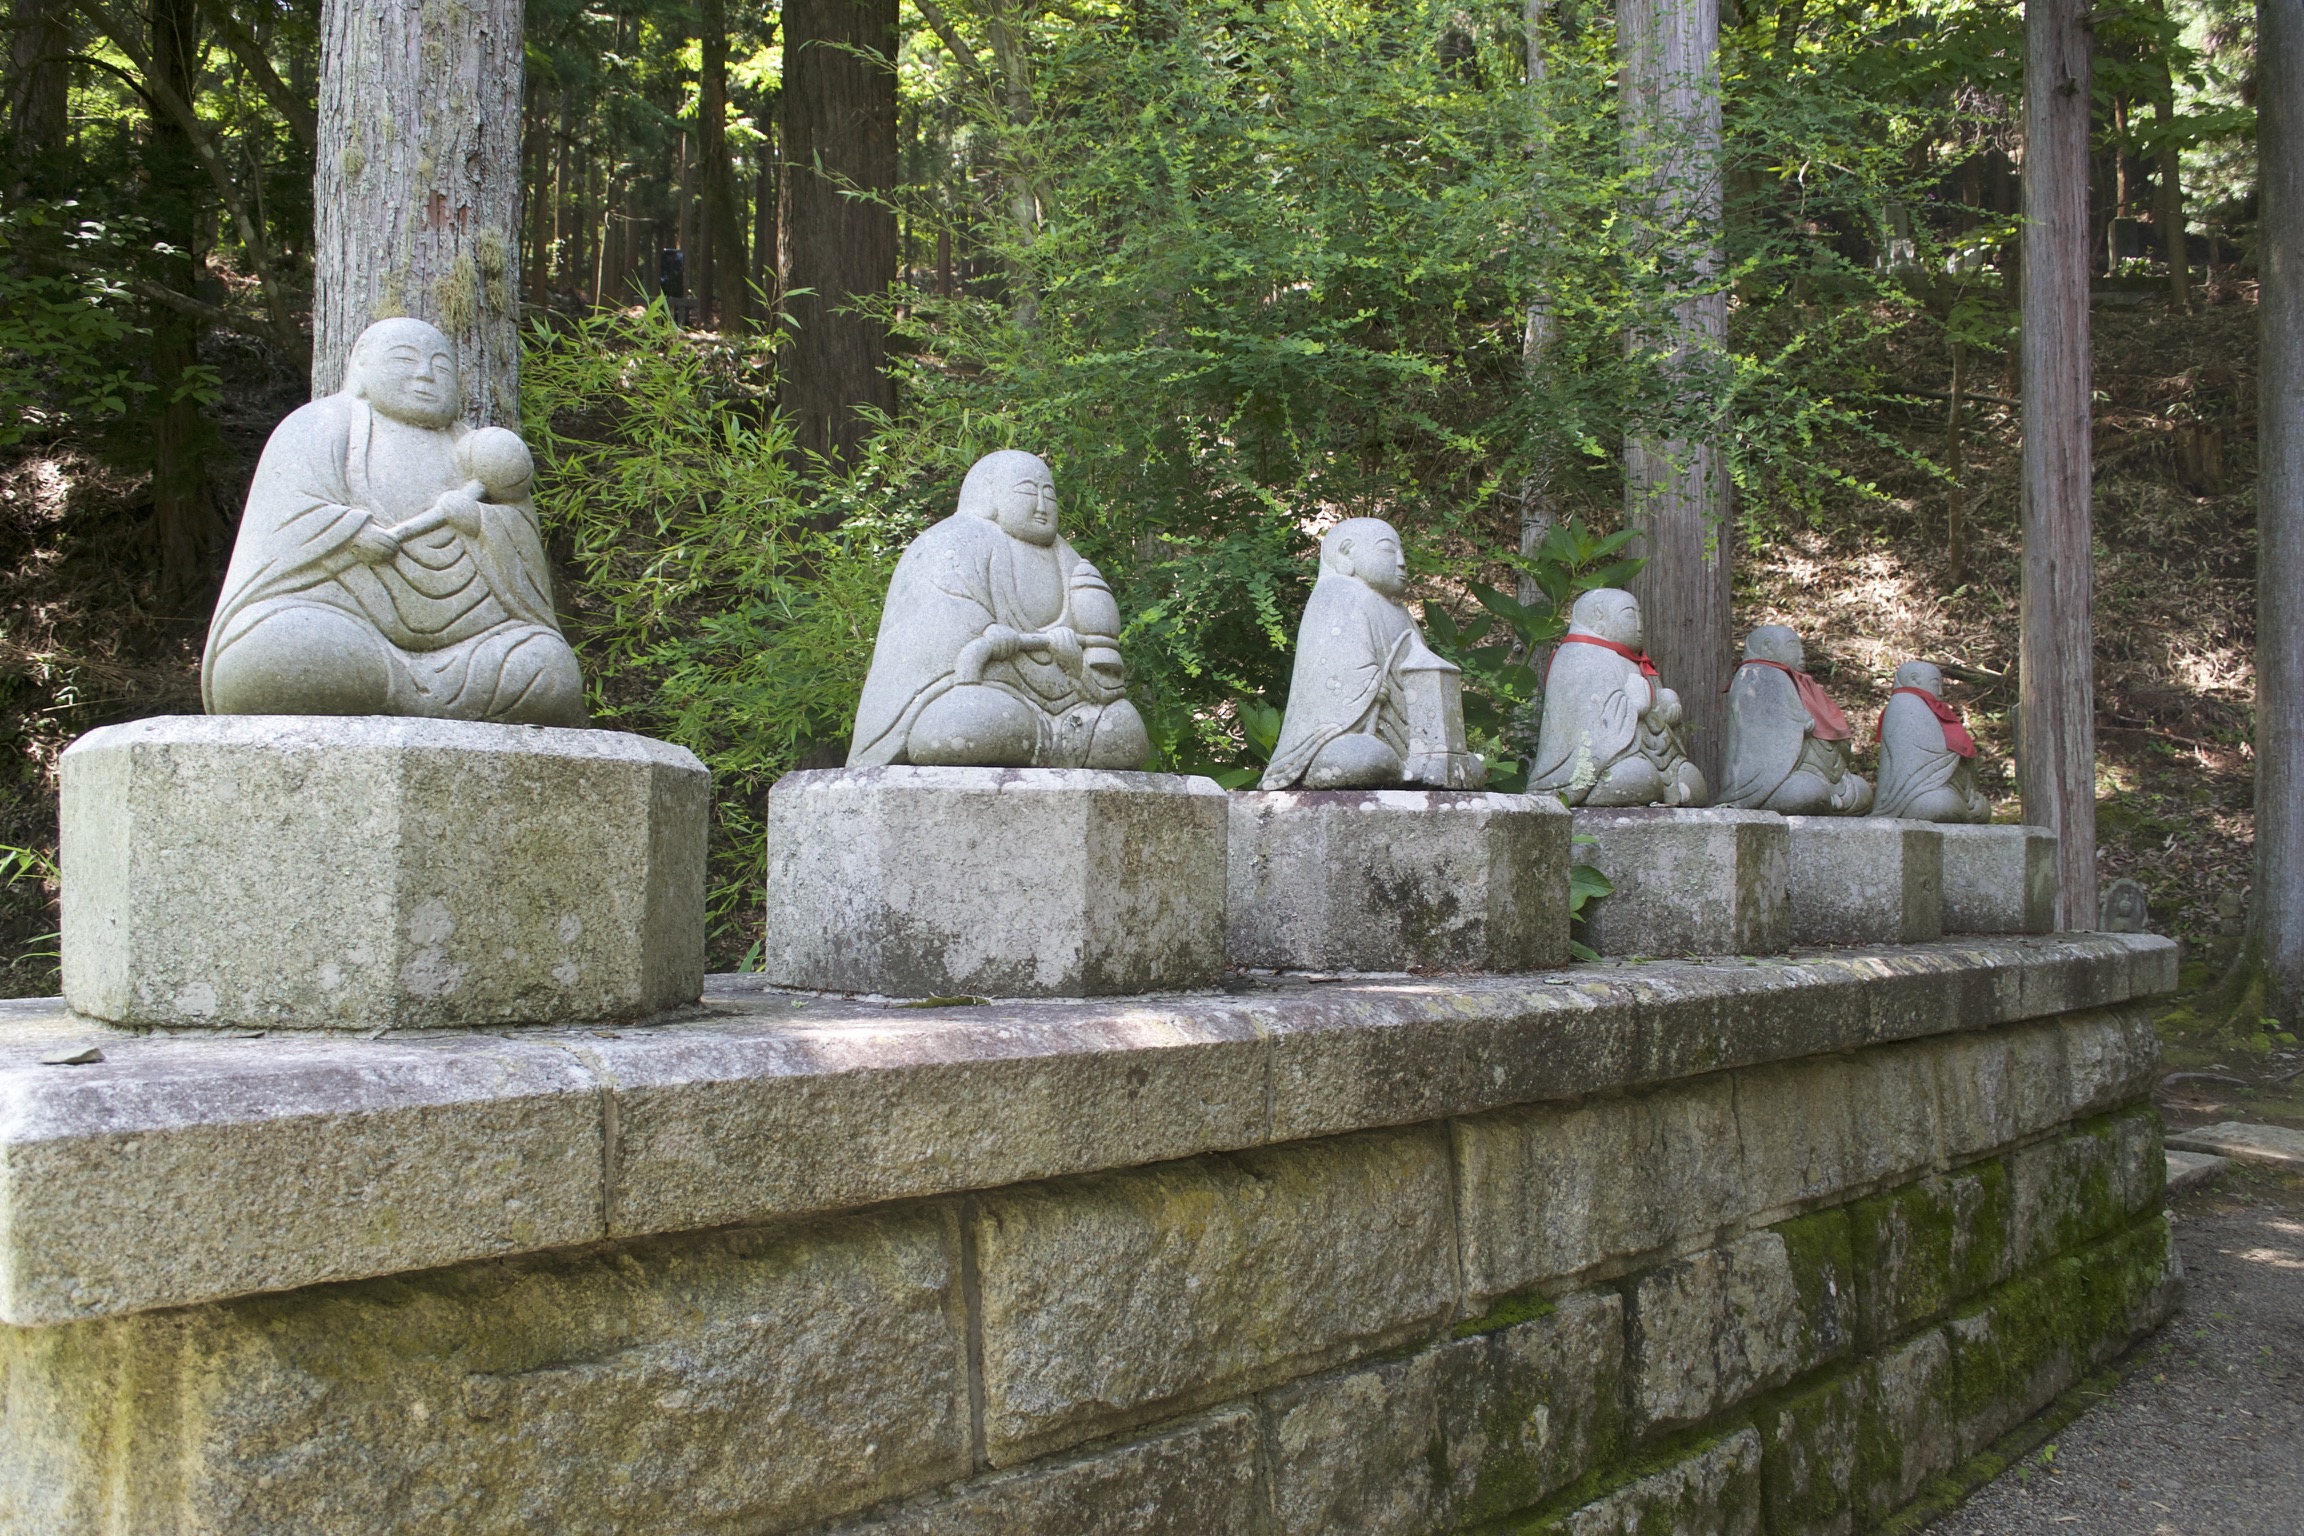 Six stone buddhas sit cross-legged, some with red cloth bibs.